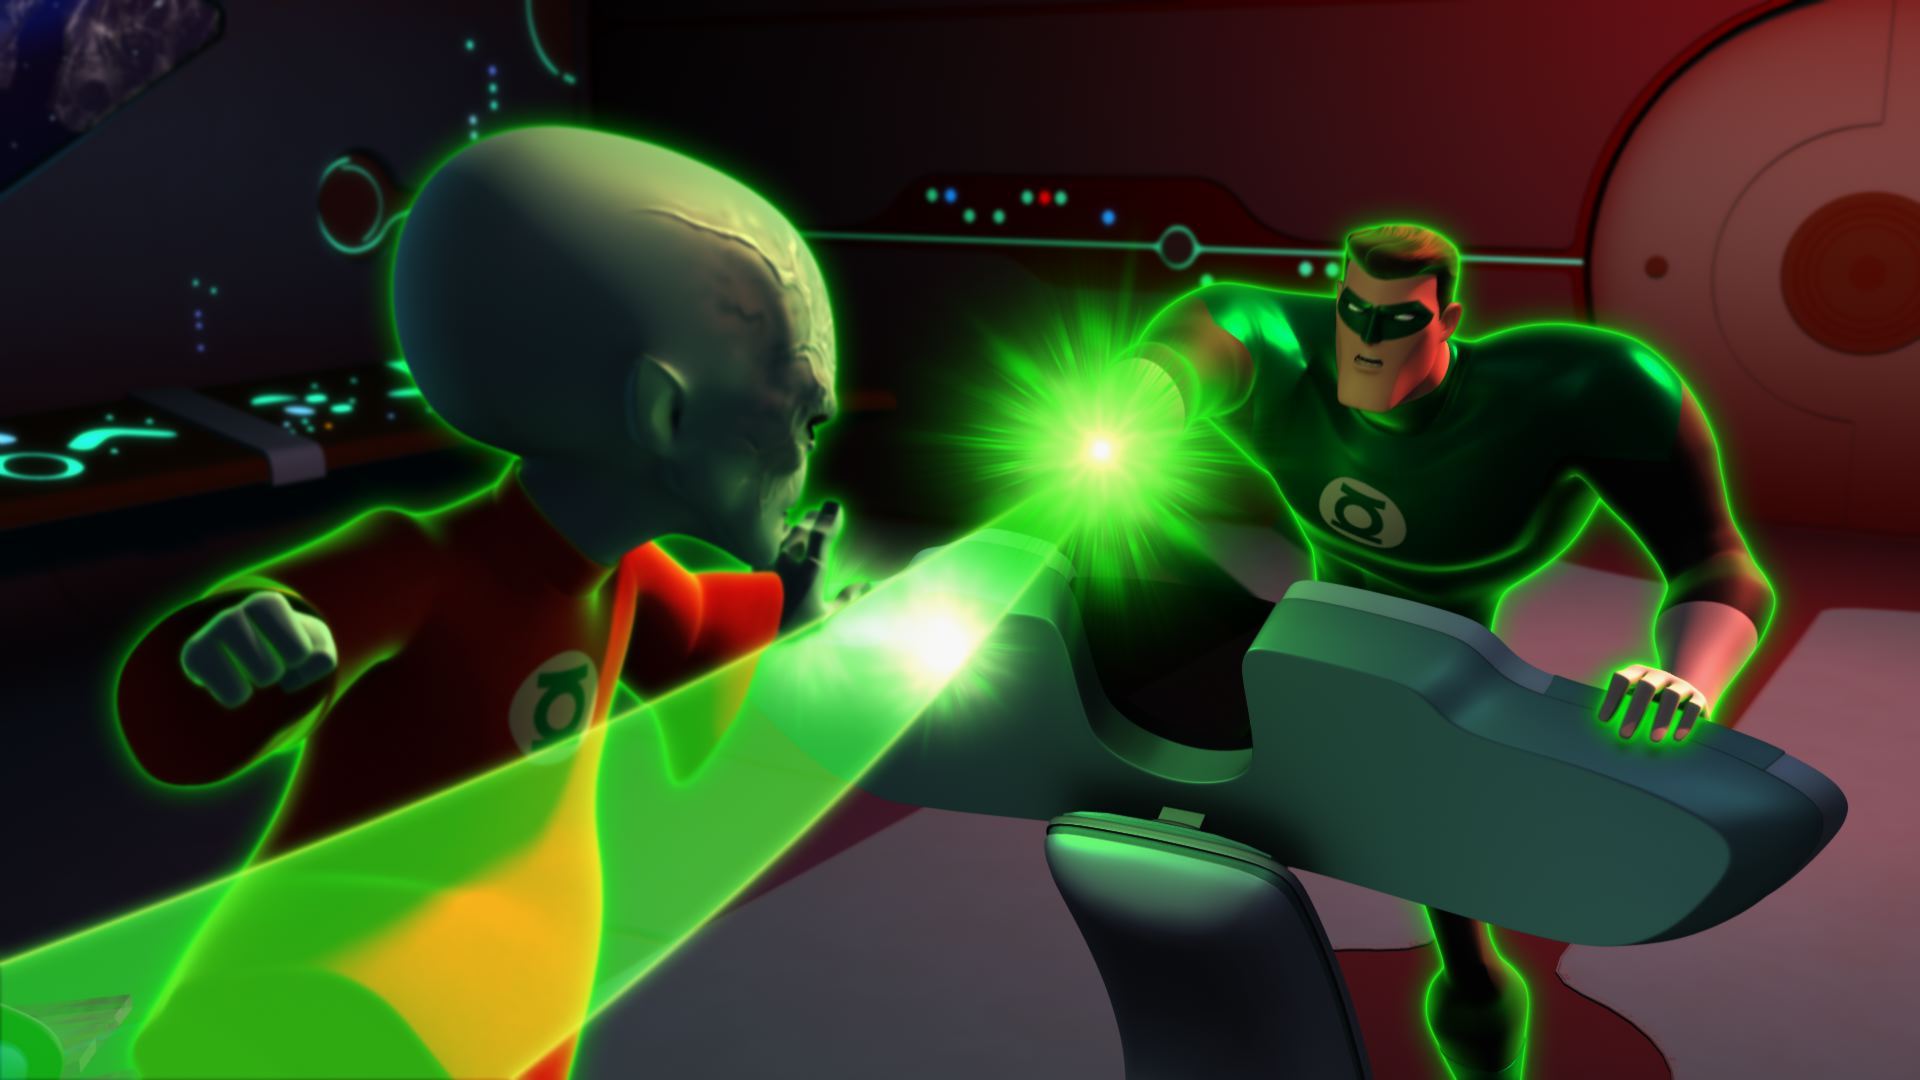 tv show, green lantern: the animated series, green lantern, hal jordan